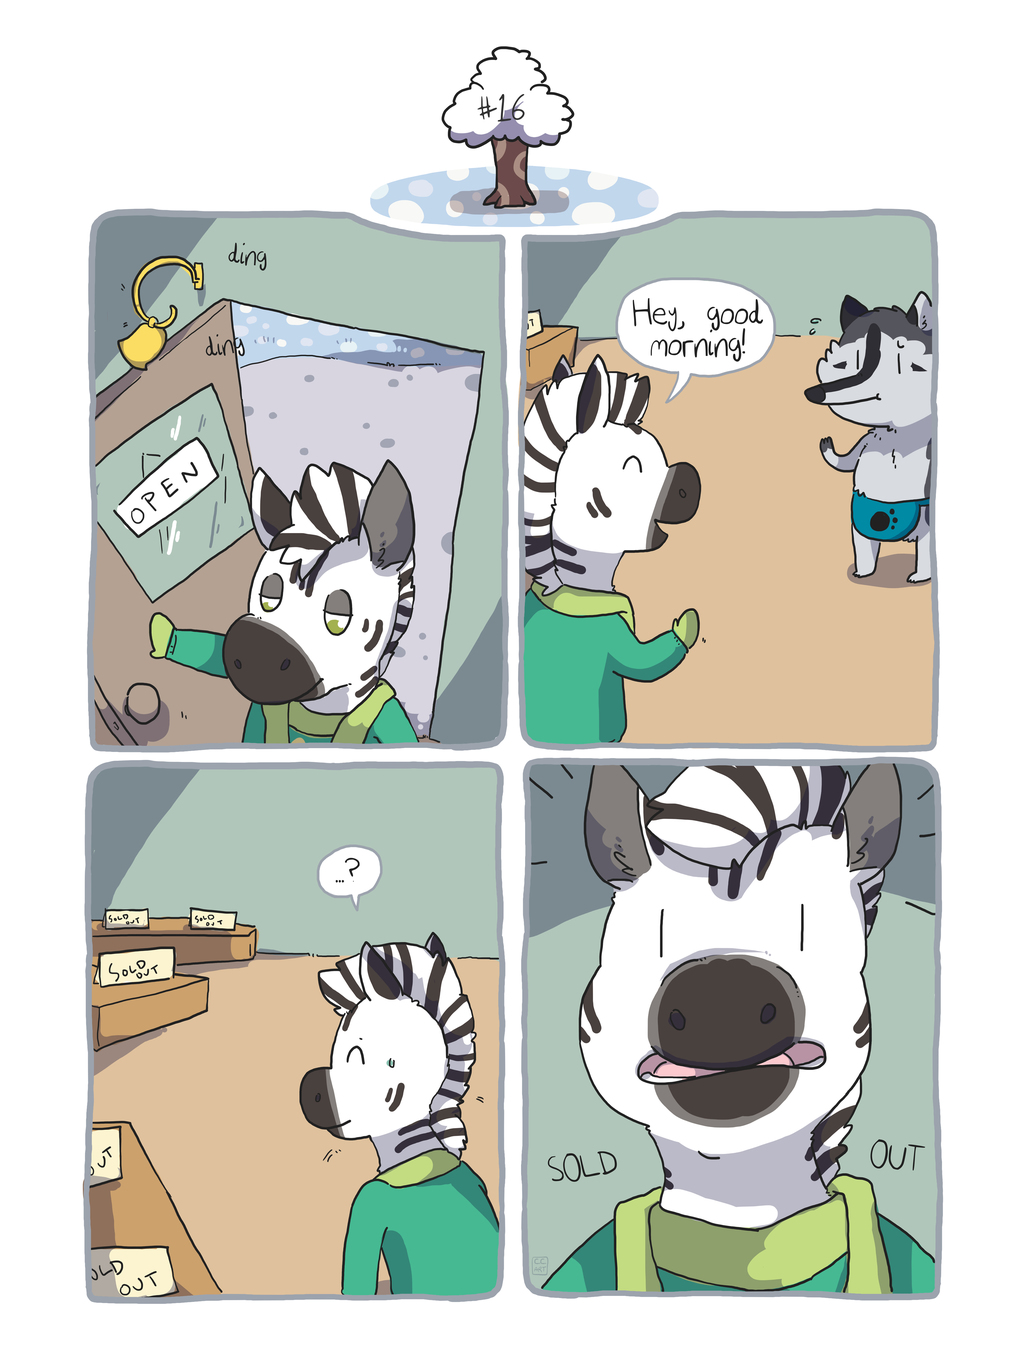 Zebra Crossing #16 [comic]